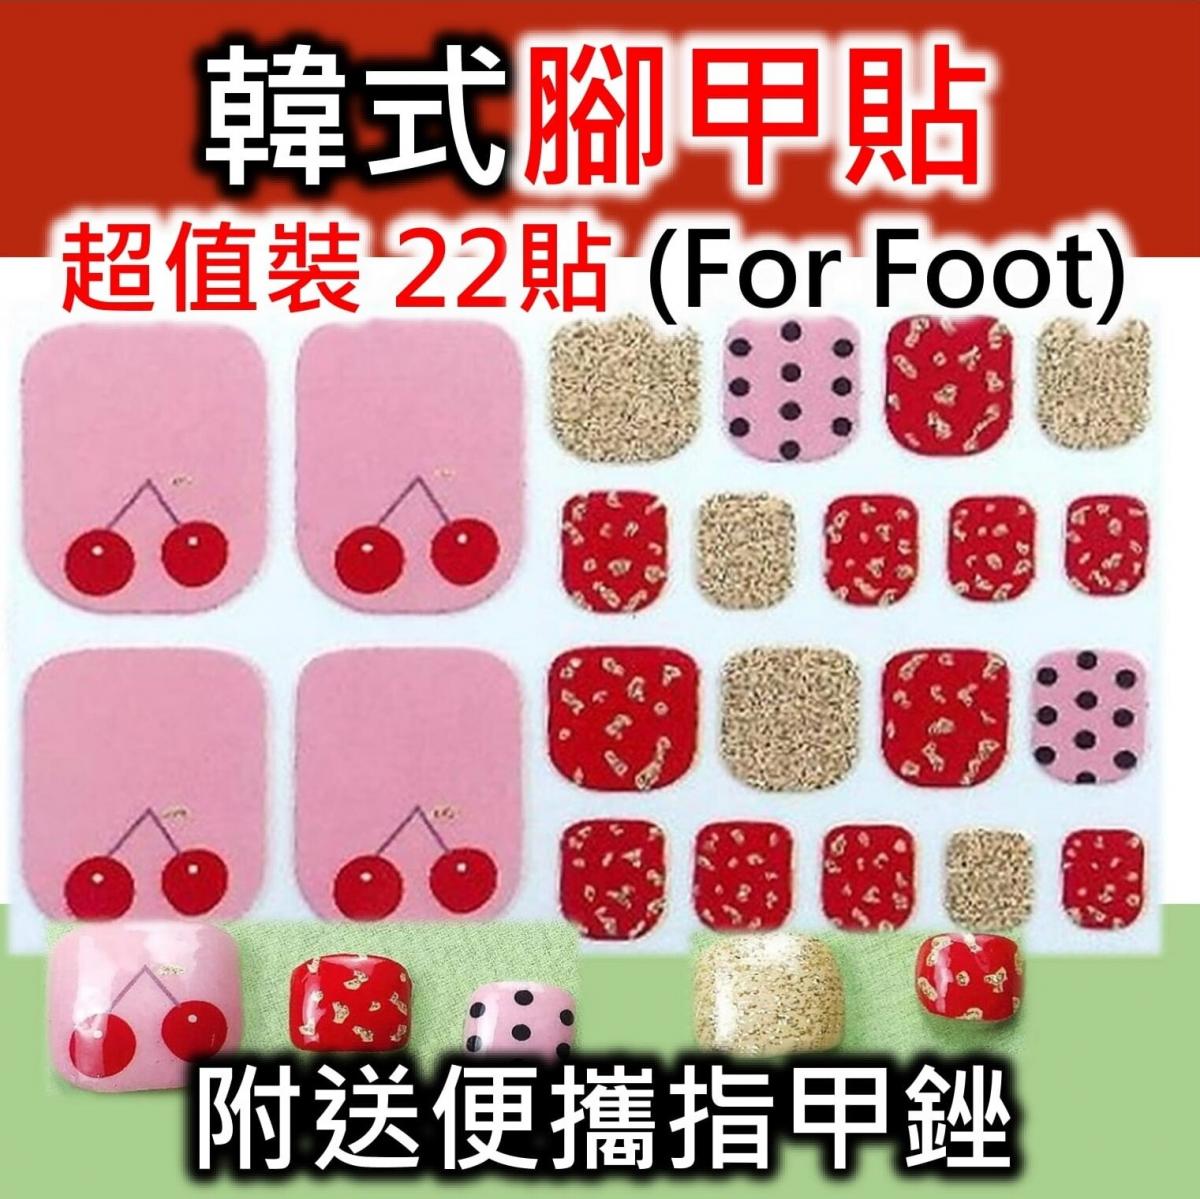 Nail stickers/toenail stickers (Free portable nail file) (Cherry)